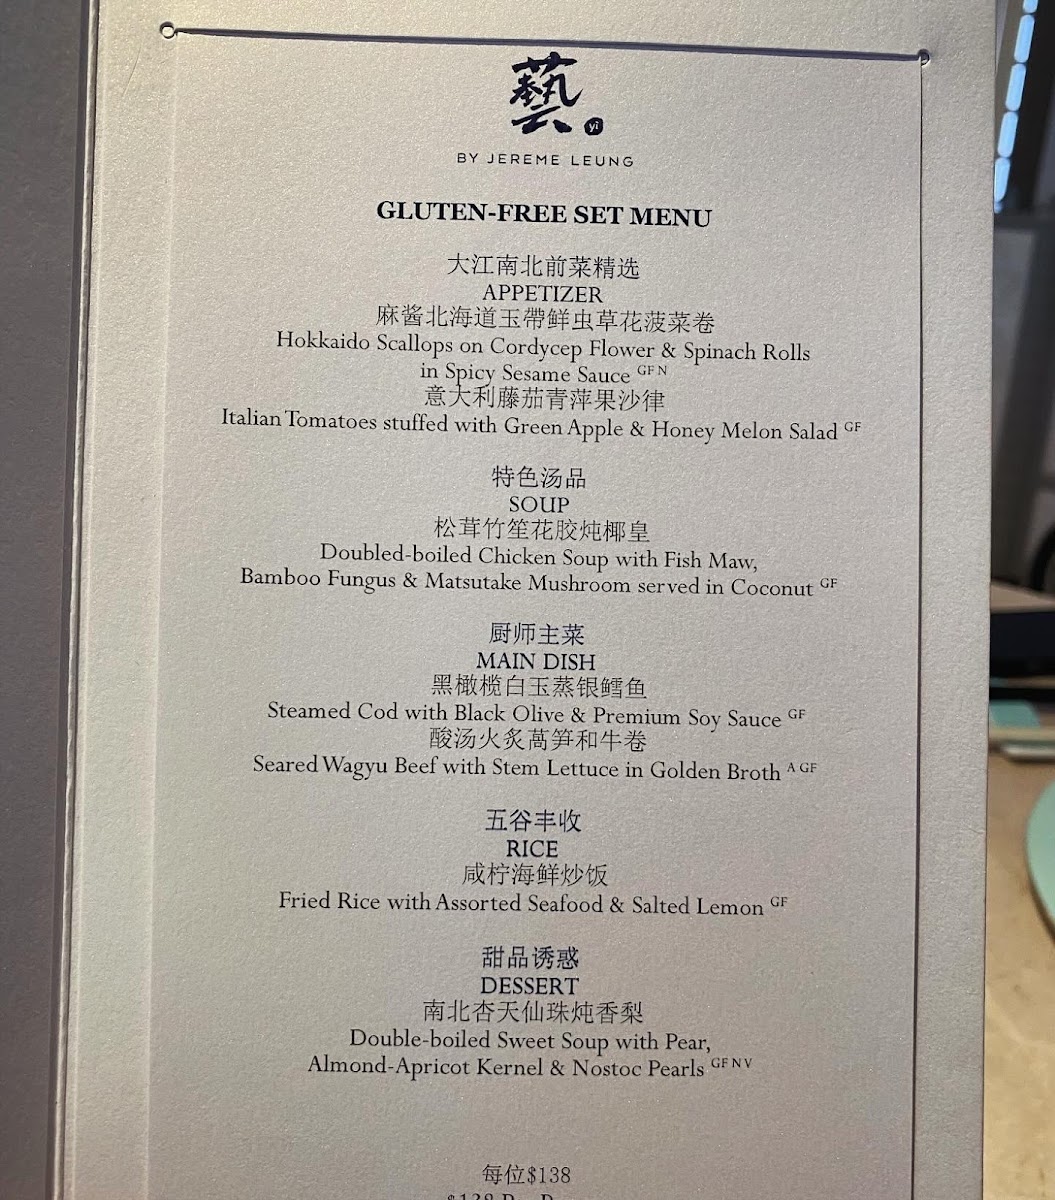 Yì By Jereme Leung gluten-free menu